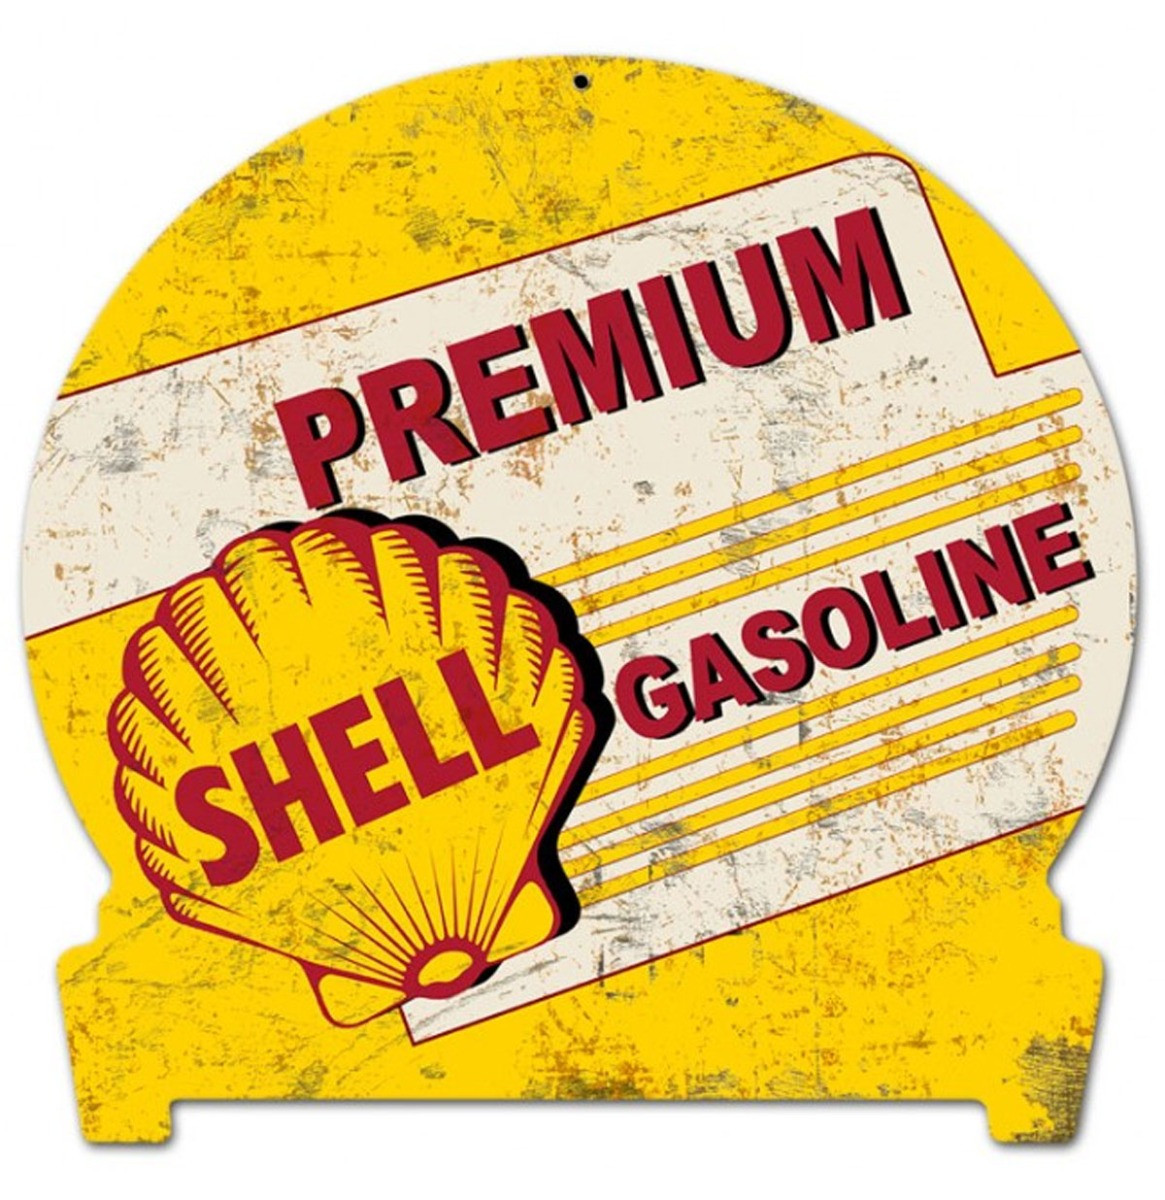 Premium Shell Gasoline Grunge Zware Metalen Bord 45 x 39,5 cm